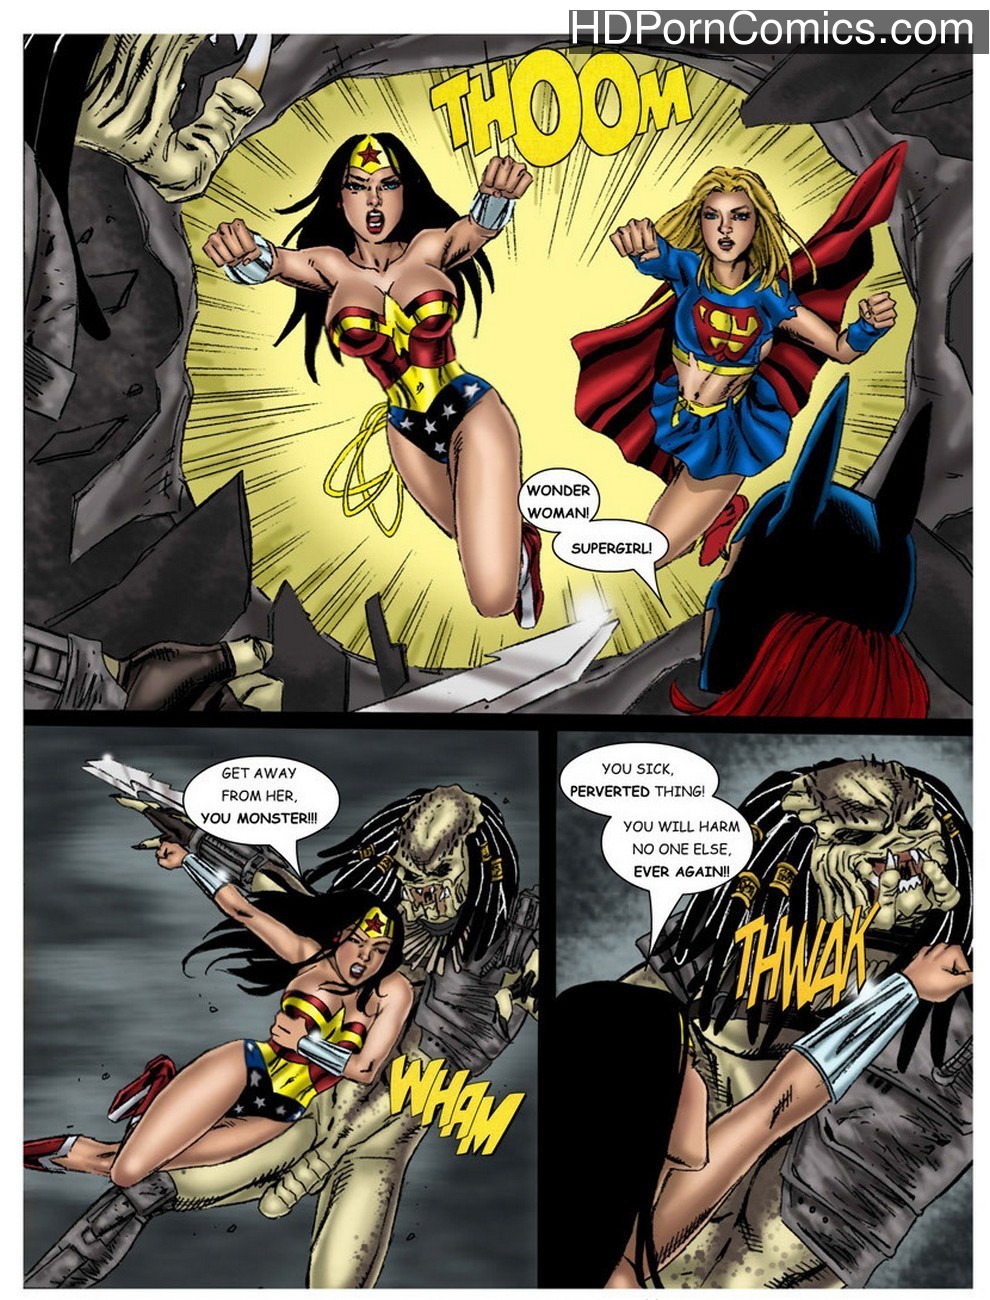 Supergirl Justice League Cartoon Porn - Vandalized XXX (Wonder Woman) - ChoChoX.com - xxx wonder ...